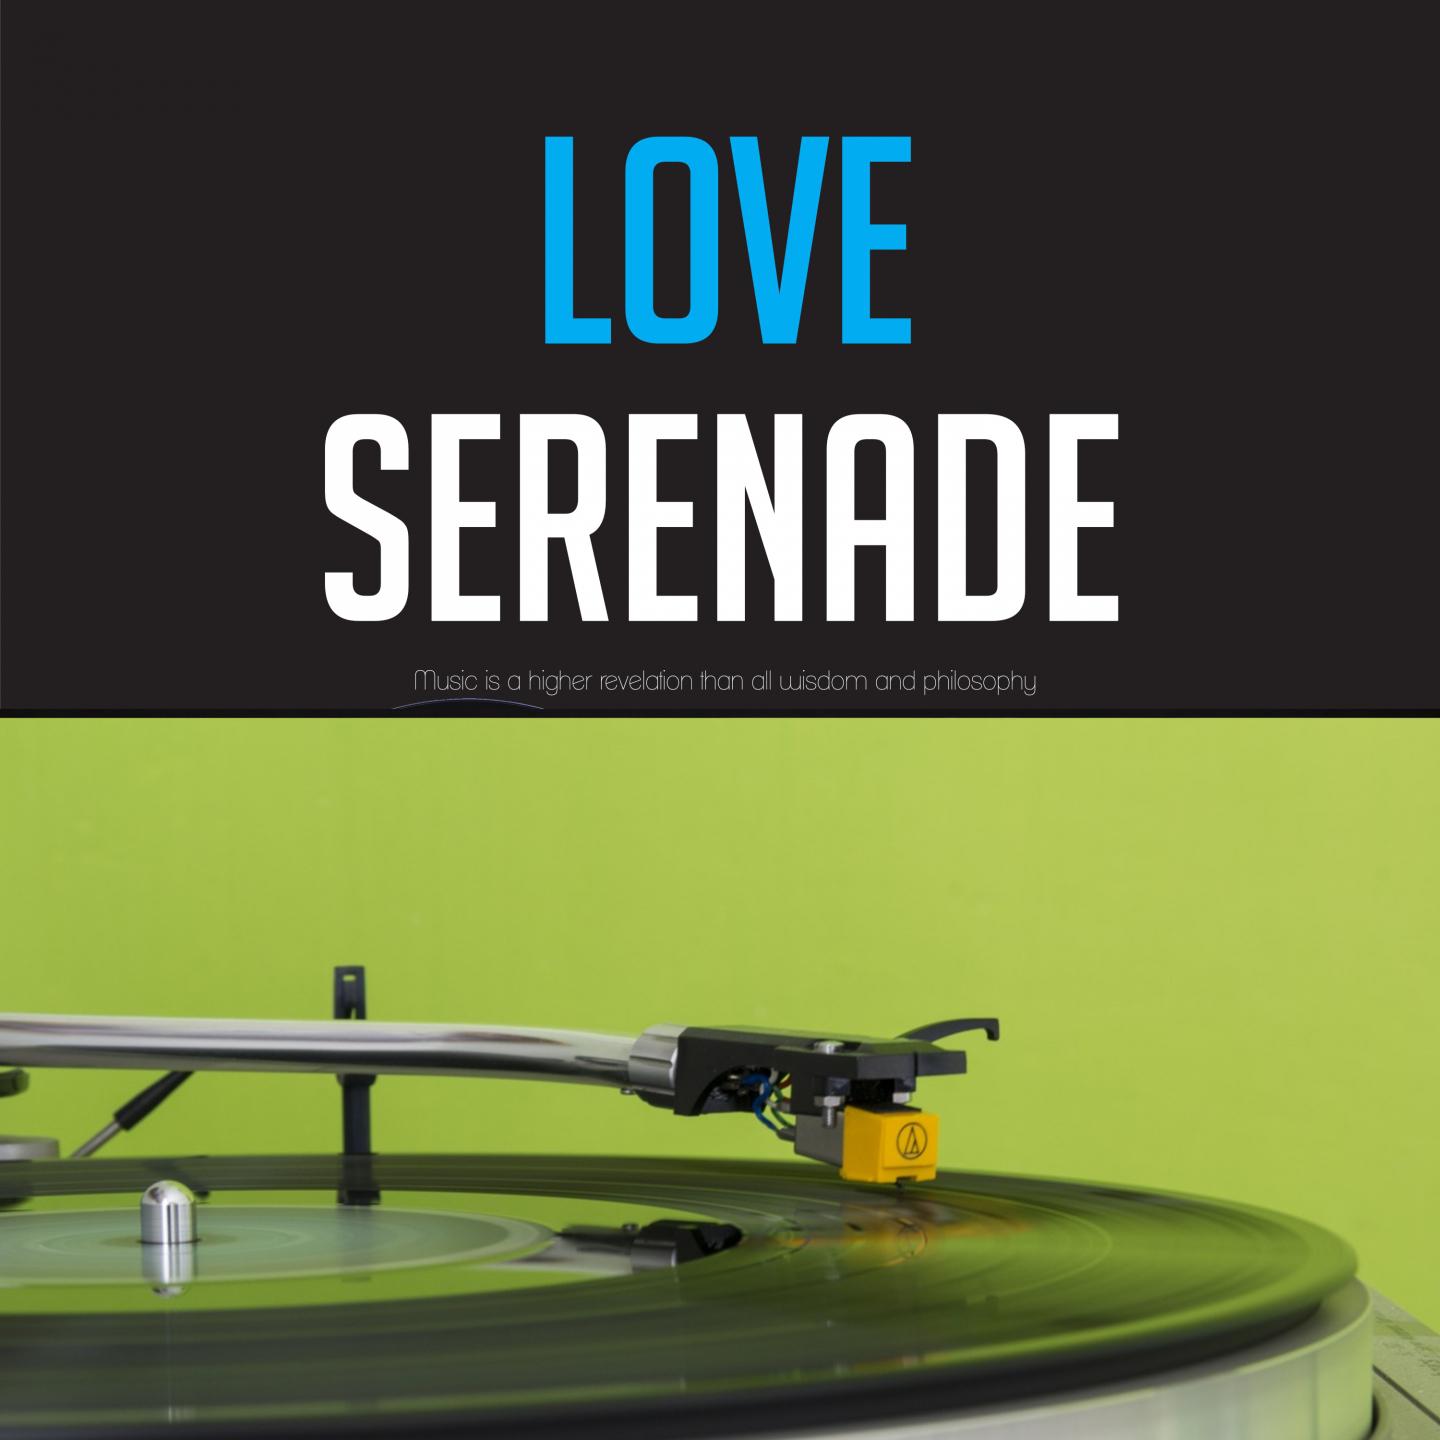 Love Serenade